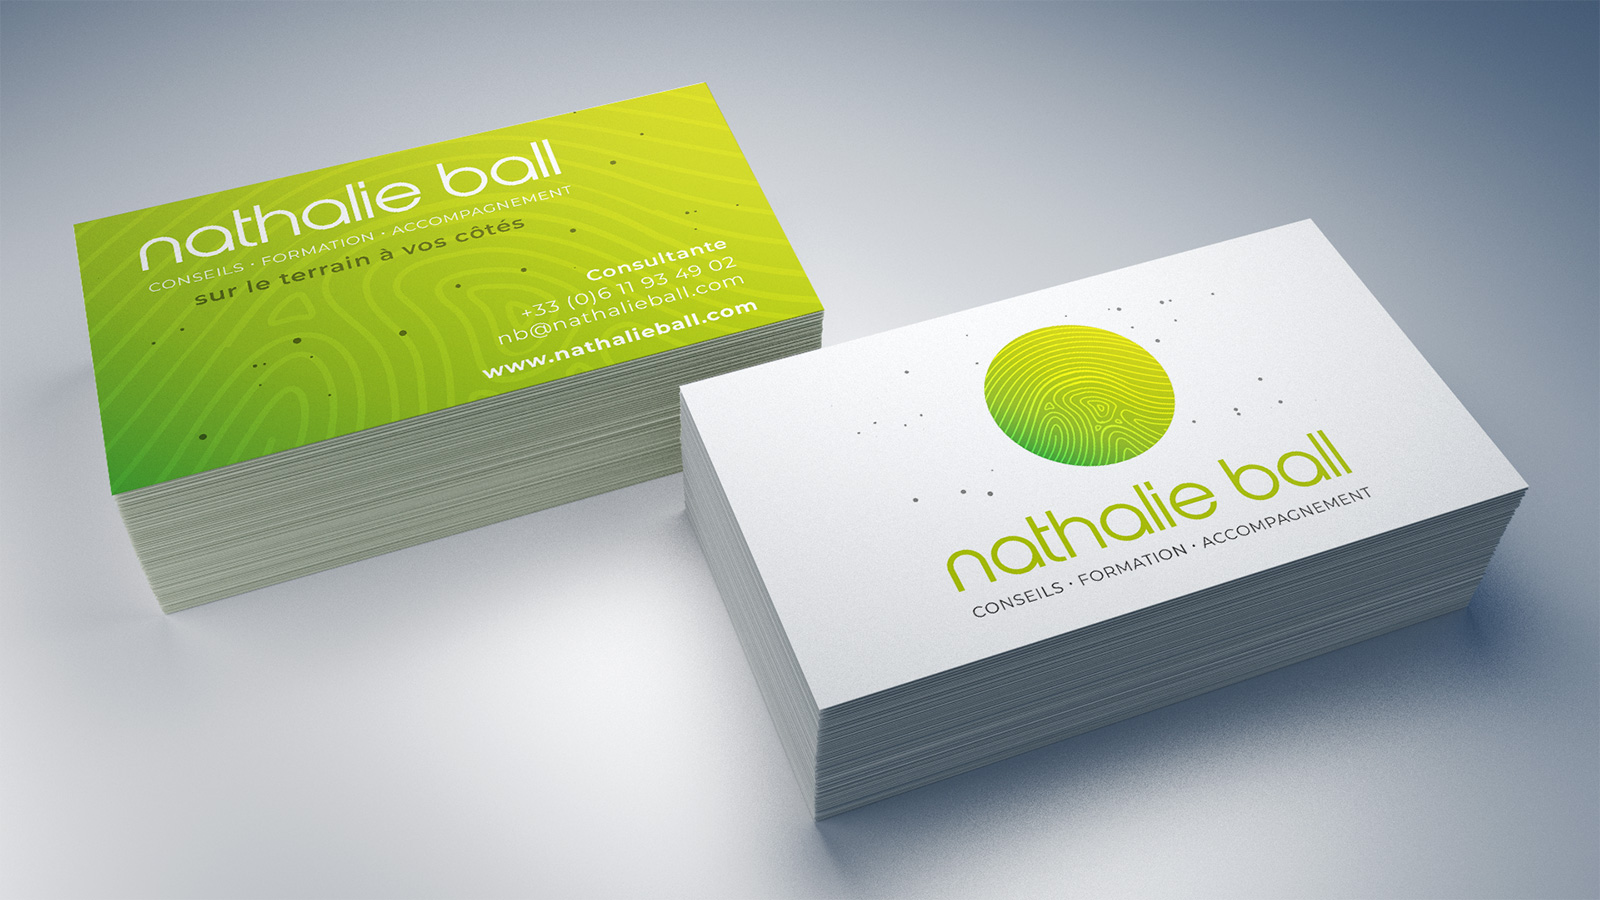 Nathalie Ball Accompagnement - logo et carte de visite